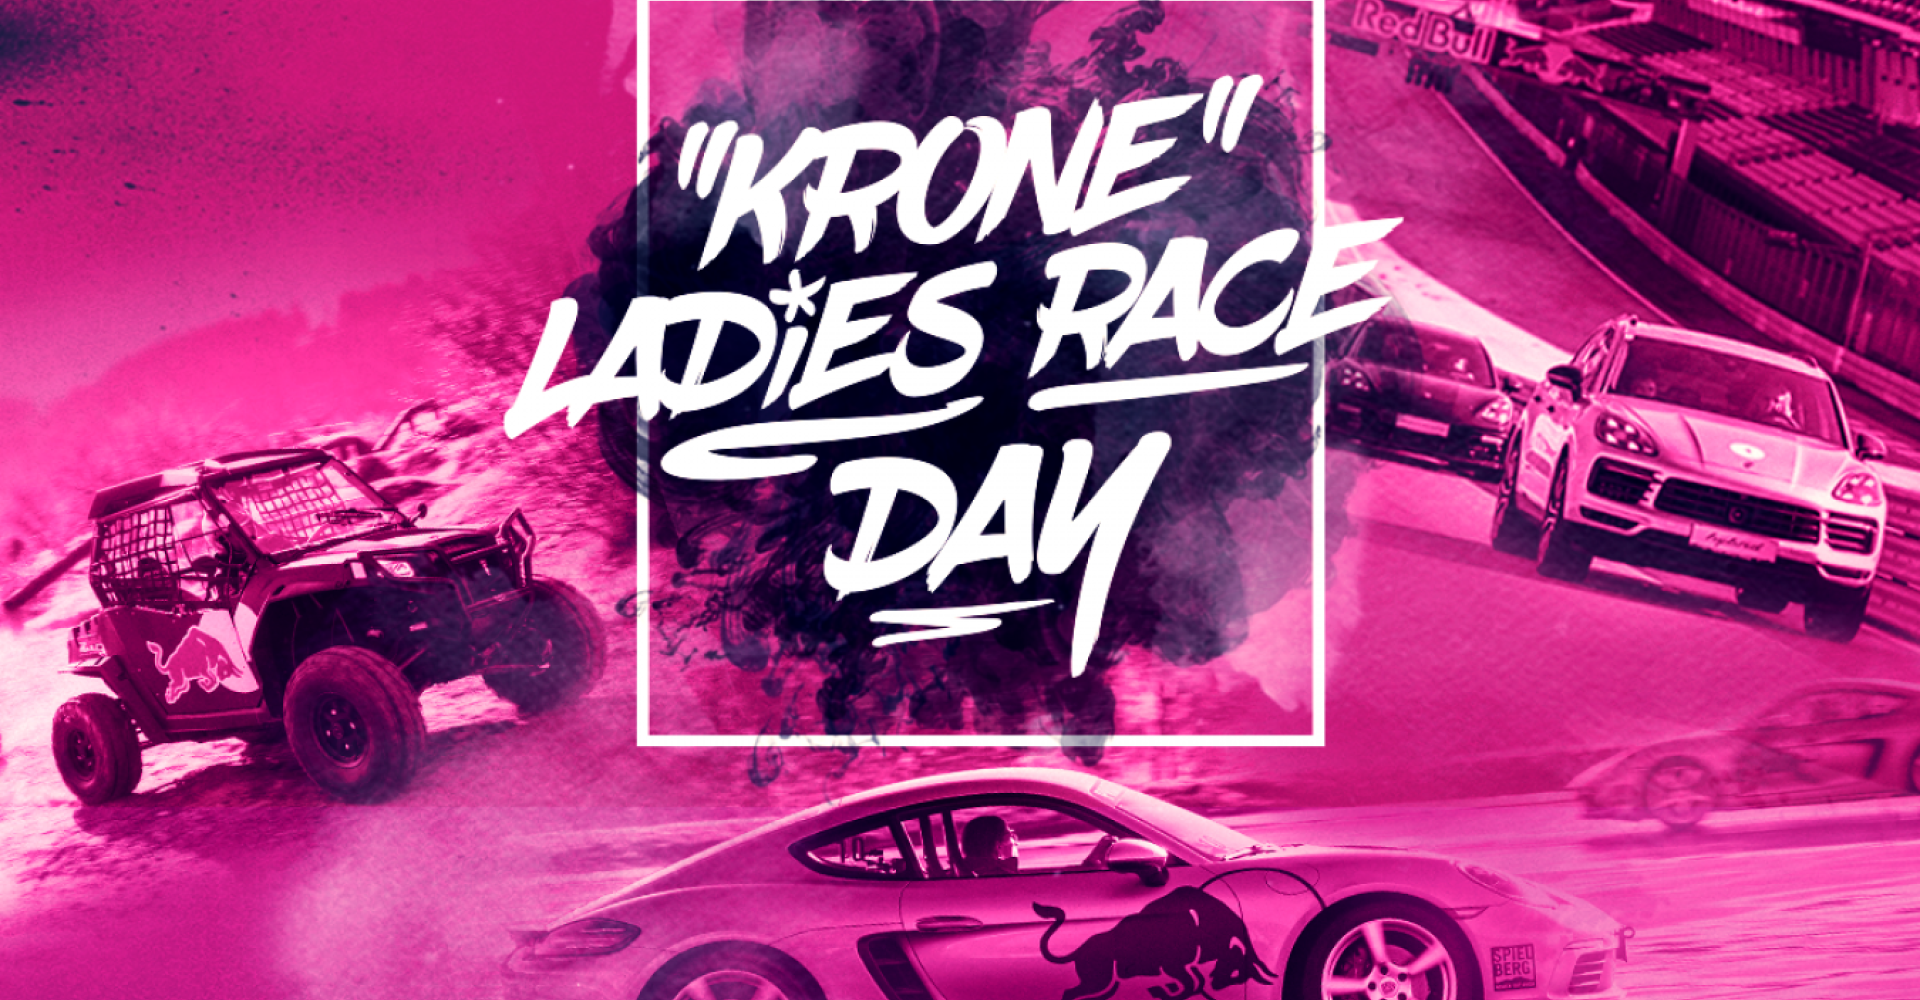 <p>Krone Ladies Race Day am Red Bull Ring&nbsp;</p> Copyright:Veranstalter